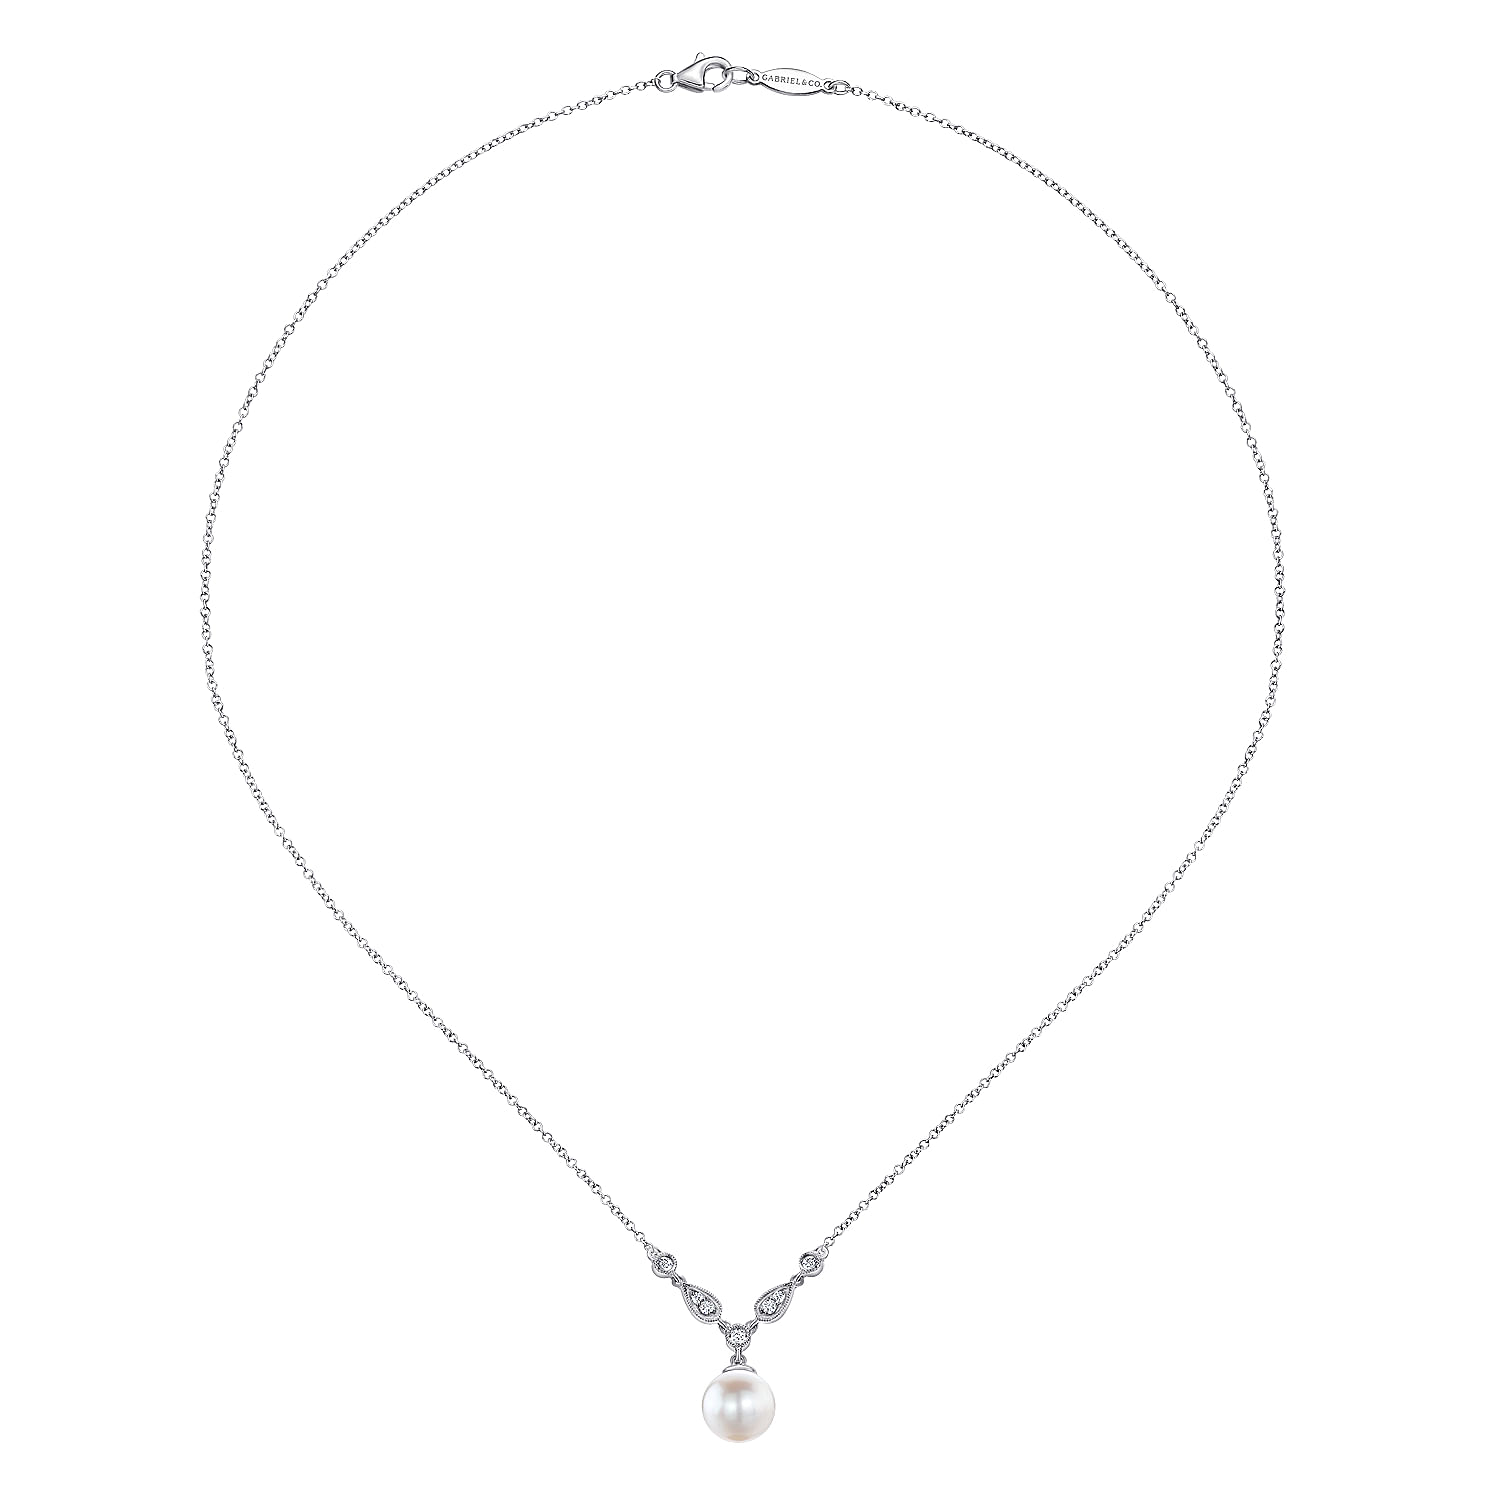 Shop Pearl Jewelry | June Birthstone Jewelry | Gabriel & Co.